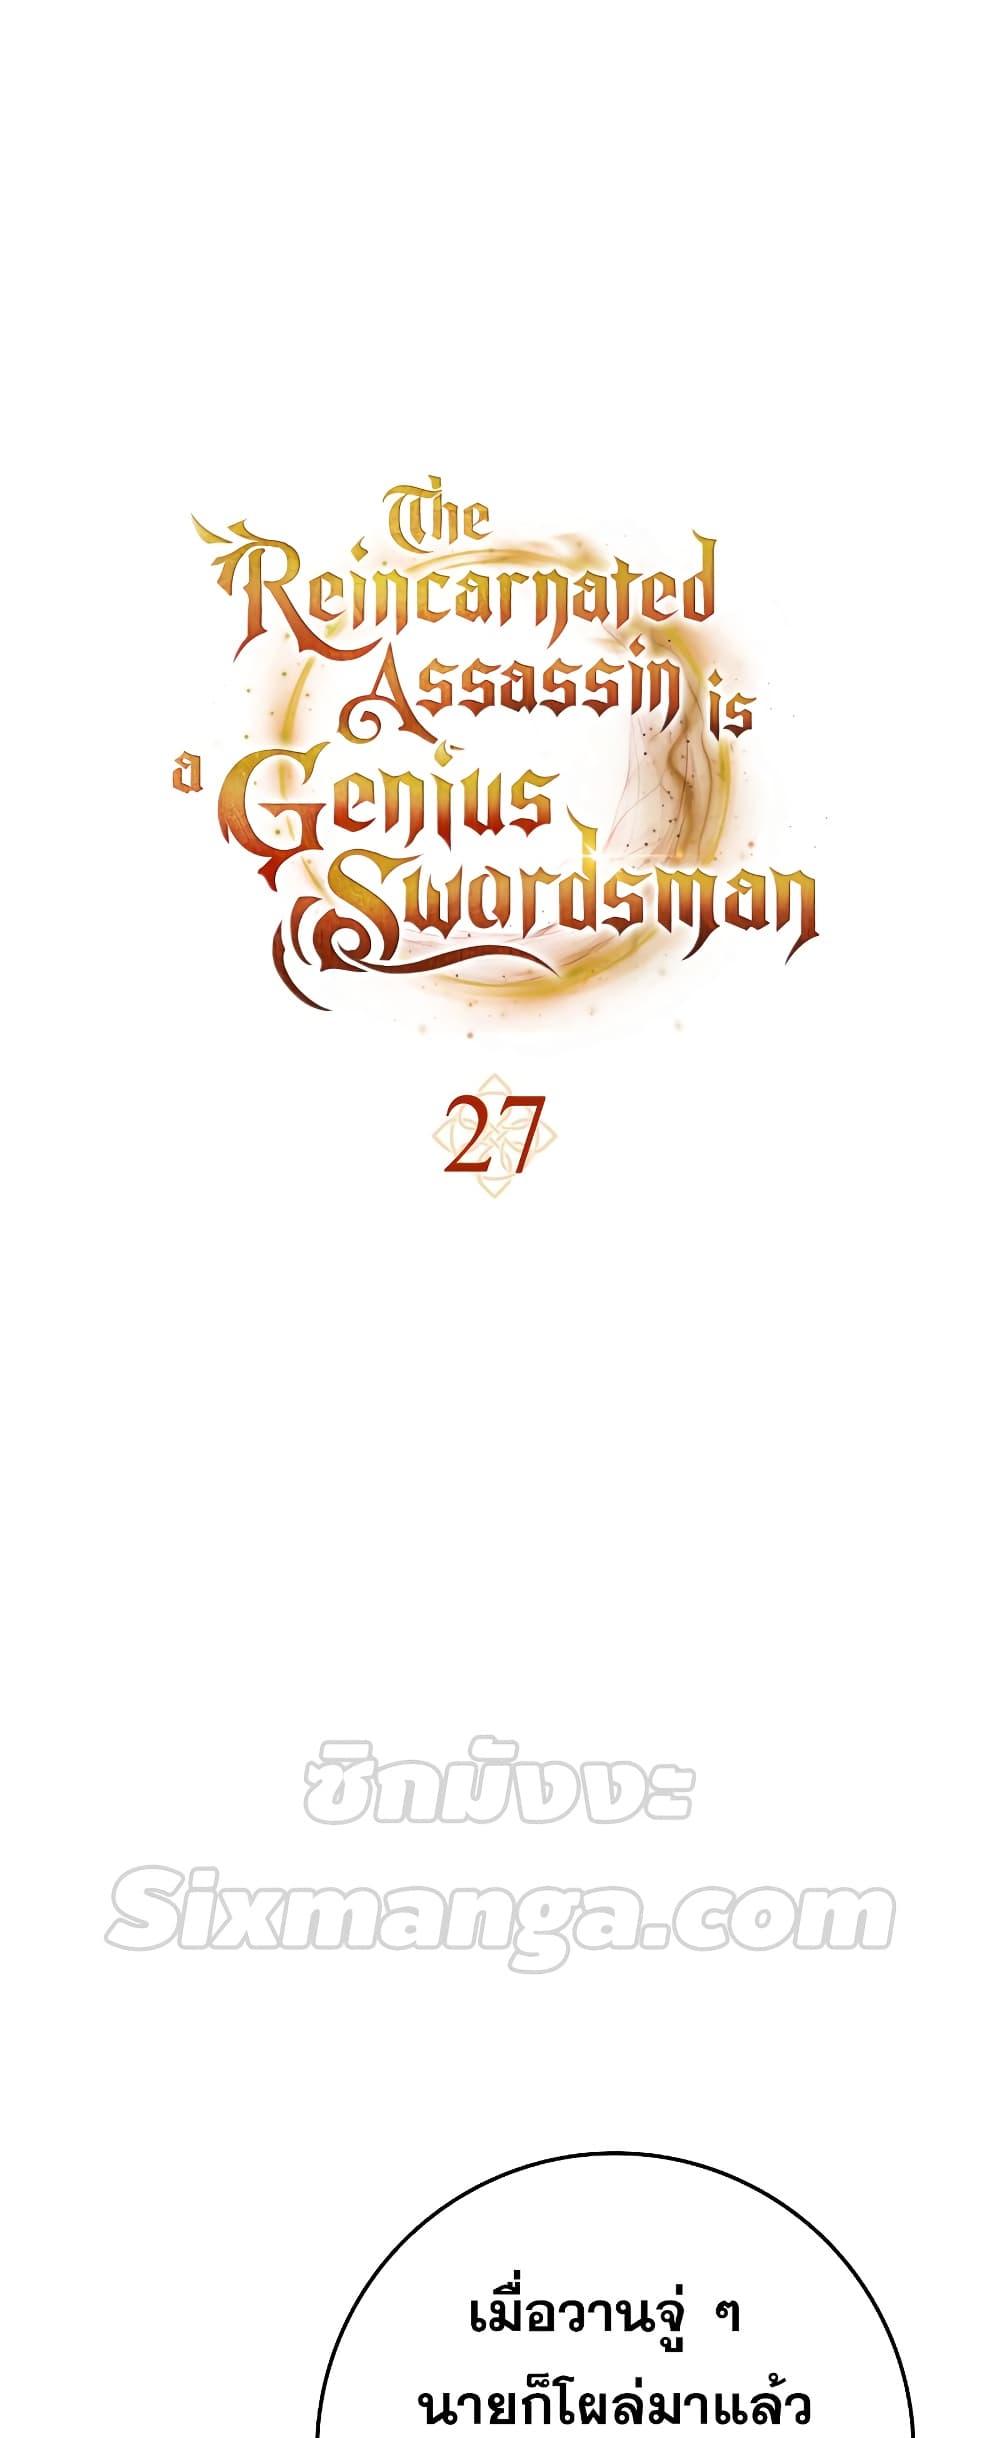 The Reincarnated Assassin is a Genius Swordsman 27-27